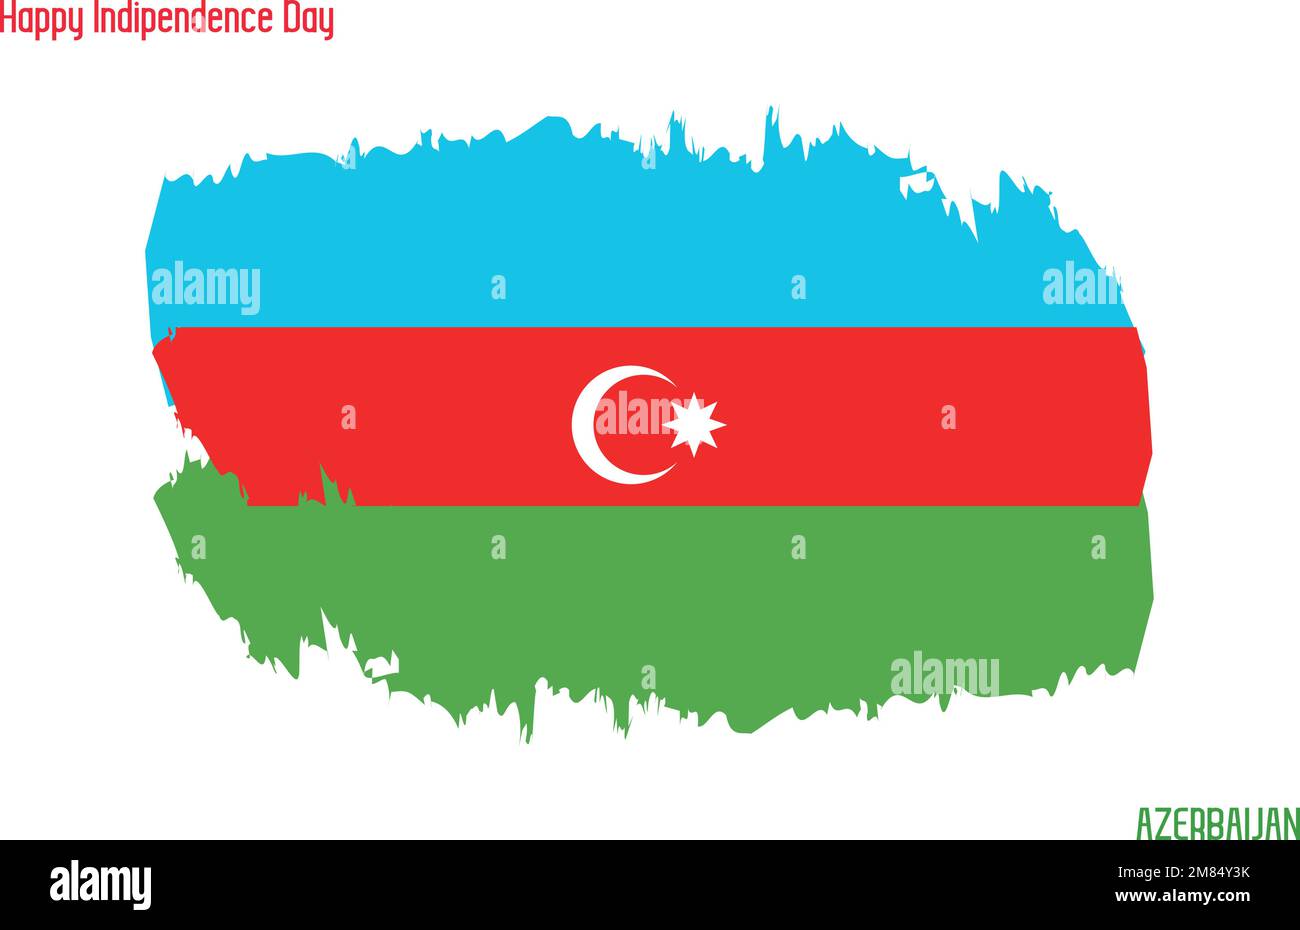 Grunge Brush Stroke Vecctor Design Azerbaijan National Flag Flag of Azerbaijan Stock Vector Stock Vector